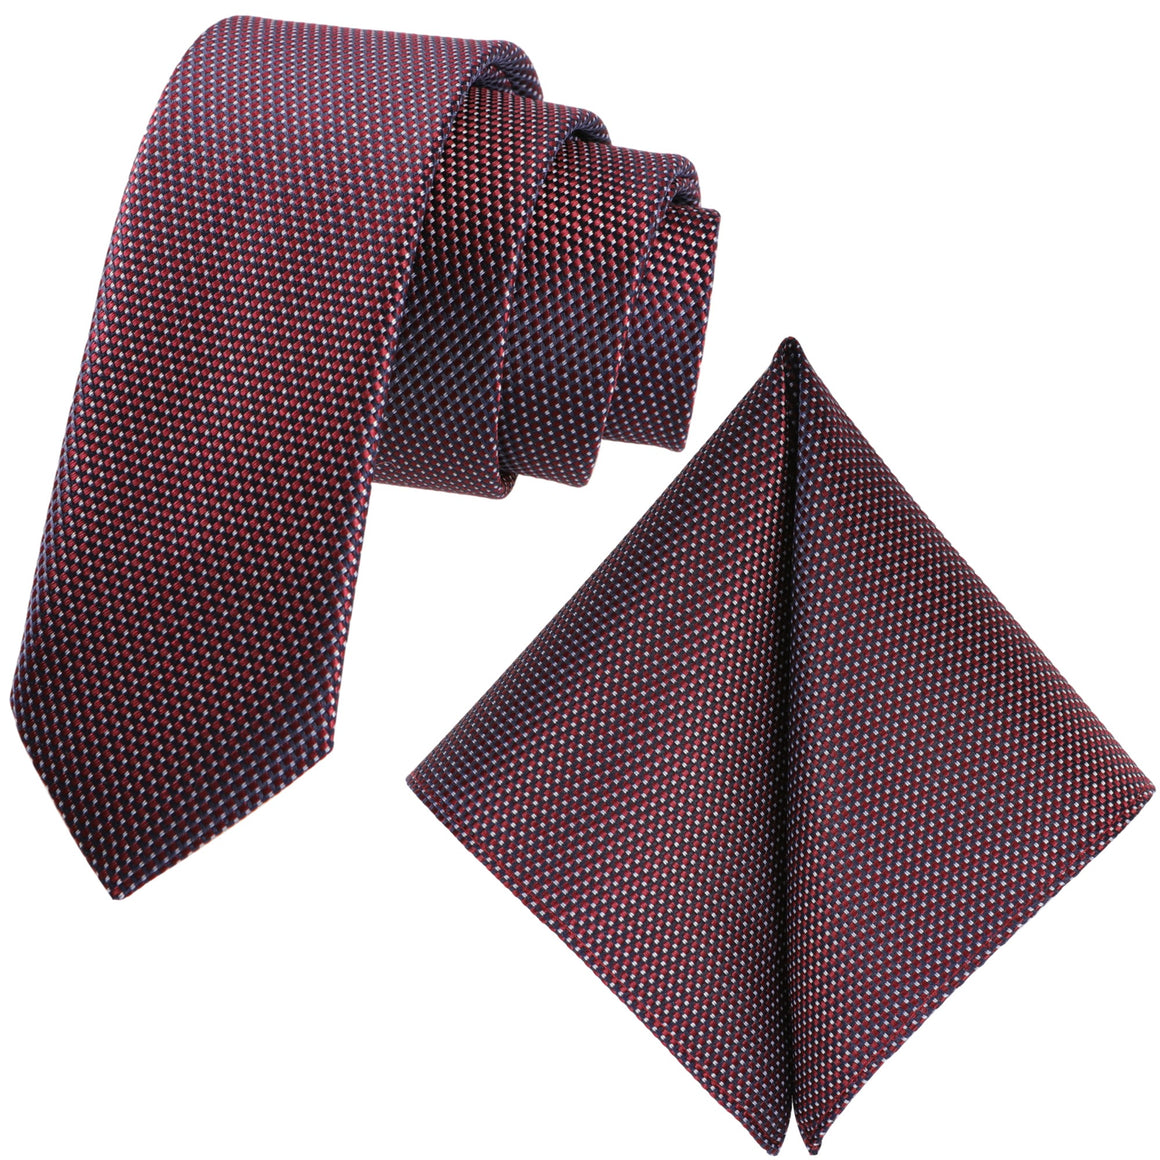 GASSANI 2-SET Krawatten-Set, 6cm Dünne Schmale Bordeaux-Rote Extra Lange Jacquard Herren-Krawatte Kariert,  Einstecktuch